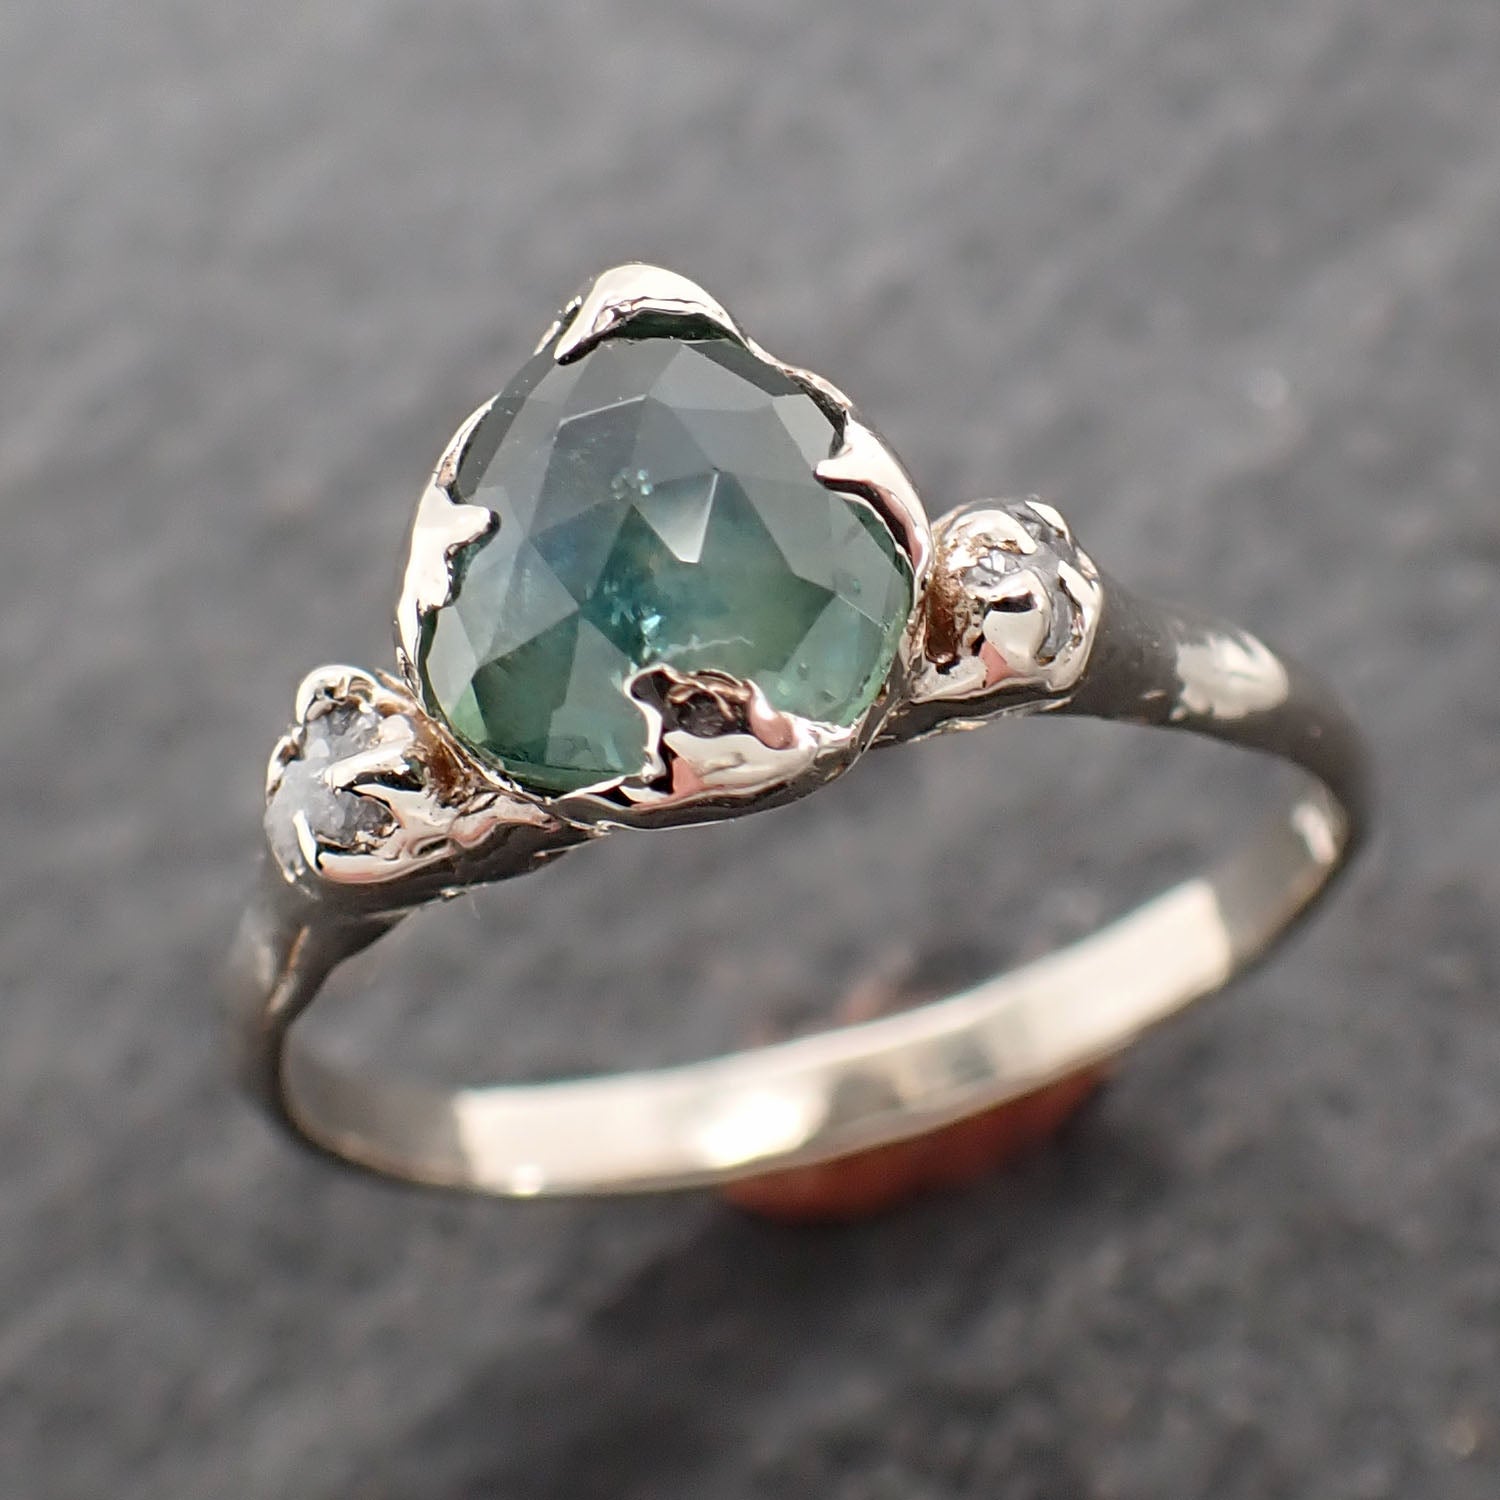 fancy cut montana sapphire diamond 14k white gold engagement ring wedding ring blue gemstone ring multi stone ring 2648 Alternative Engagement